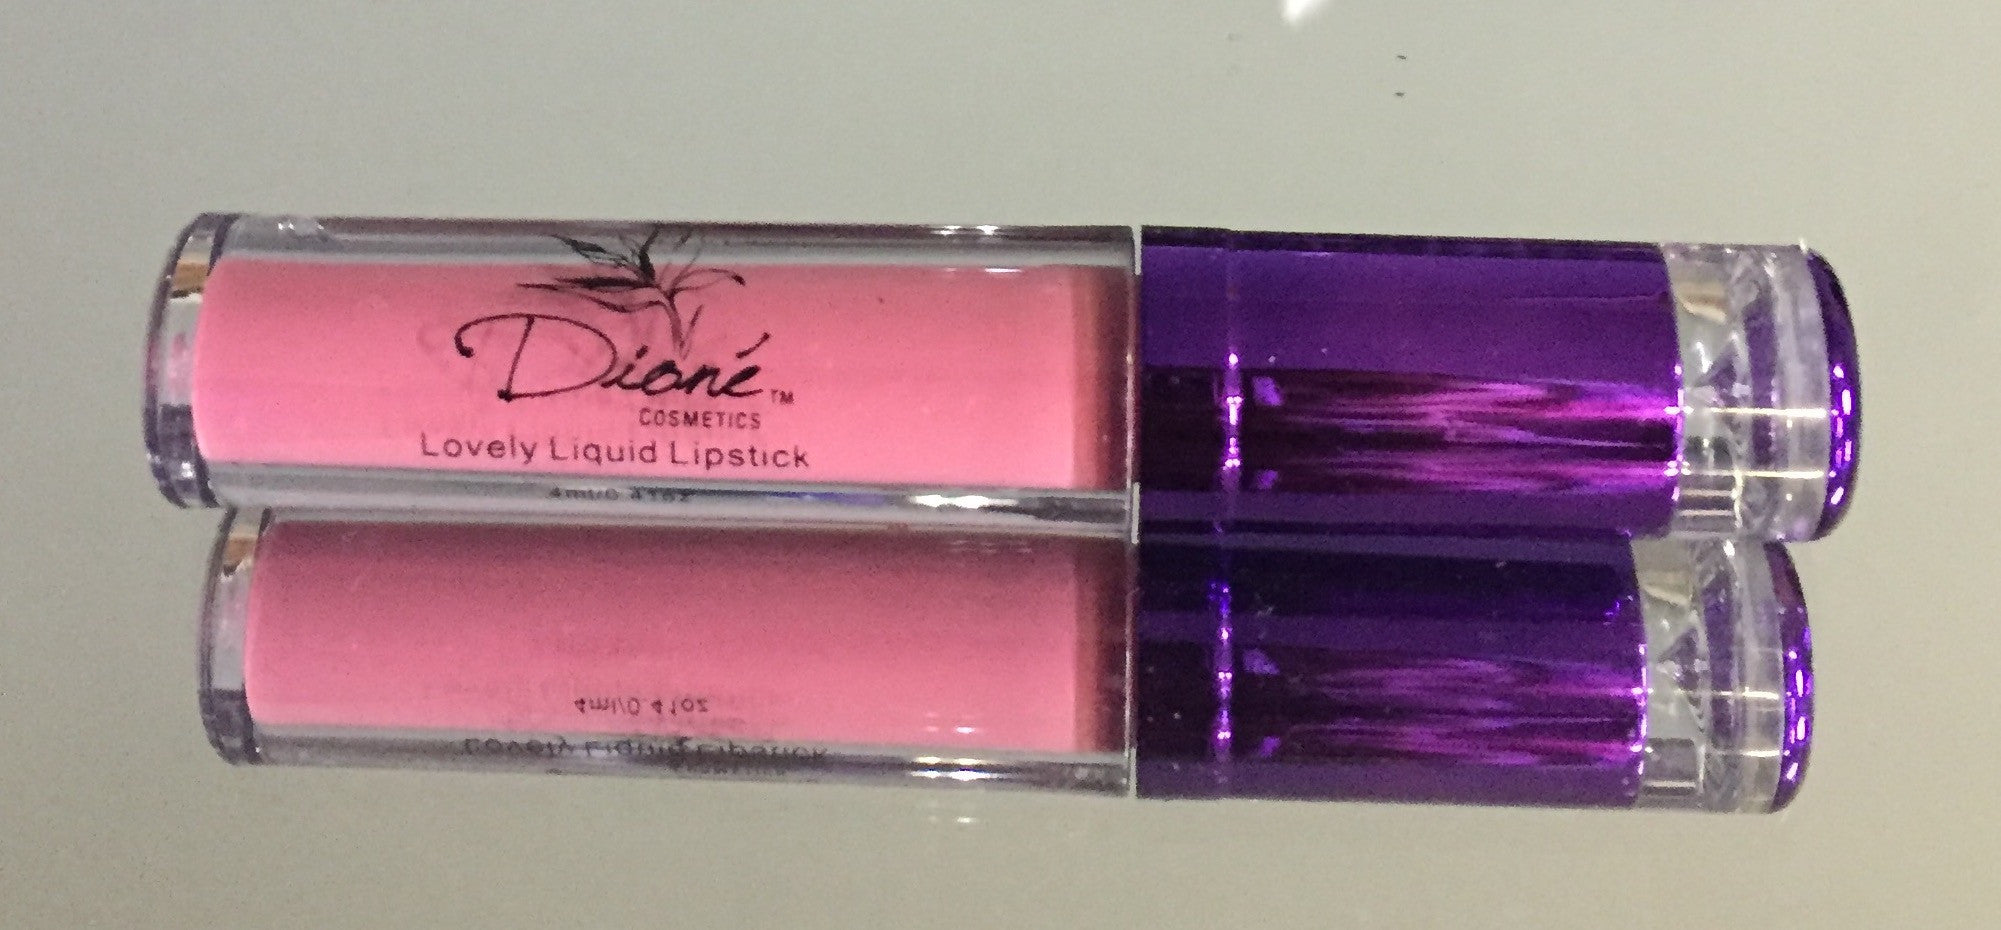 Lovely Liquid Lipsticks